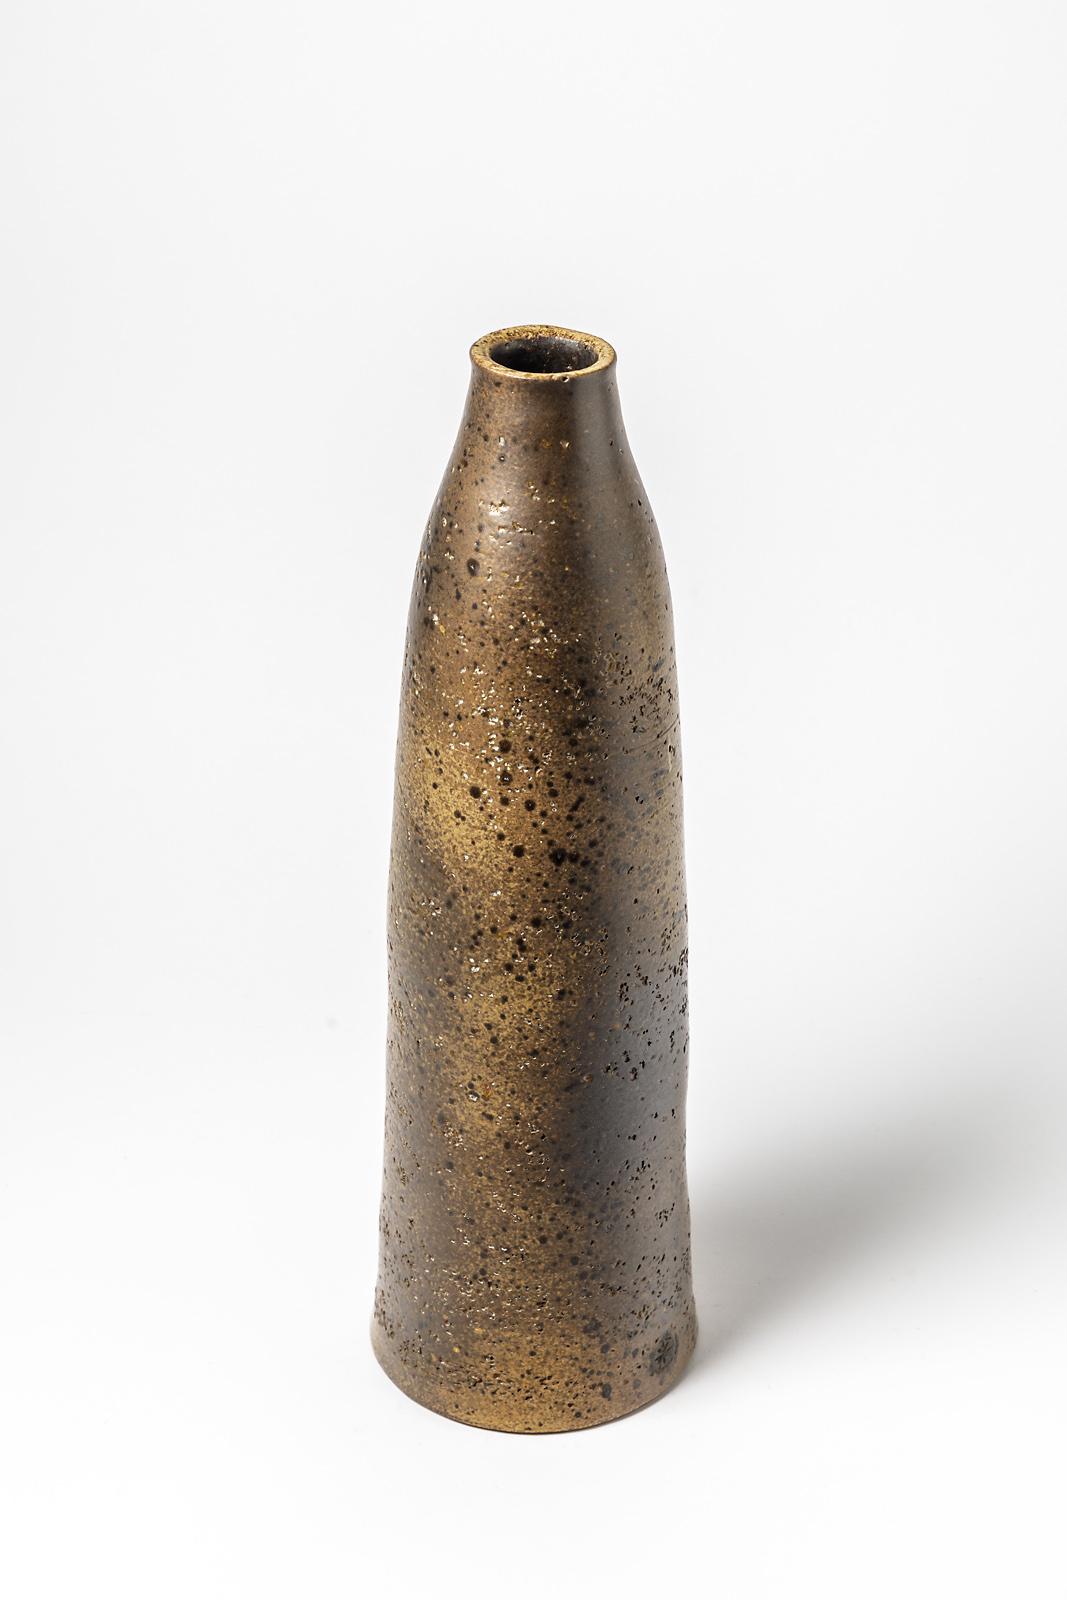 French Mid-20th Century Large Stoneware Ceramic Bottle or Vase Signed  For Sale